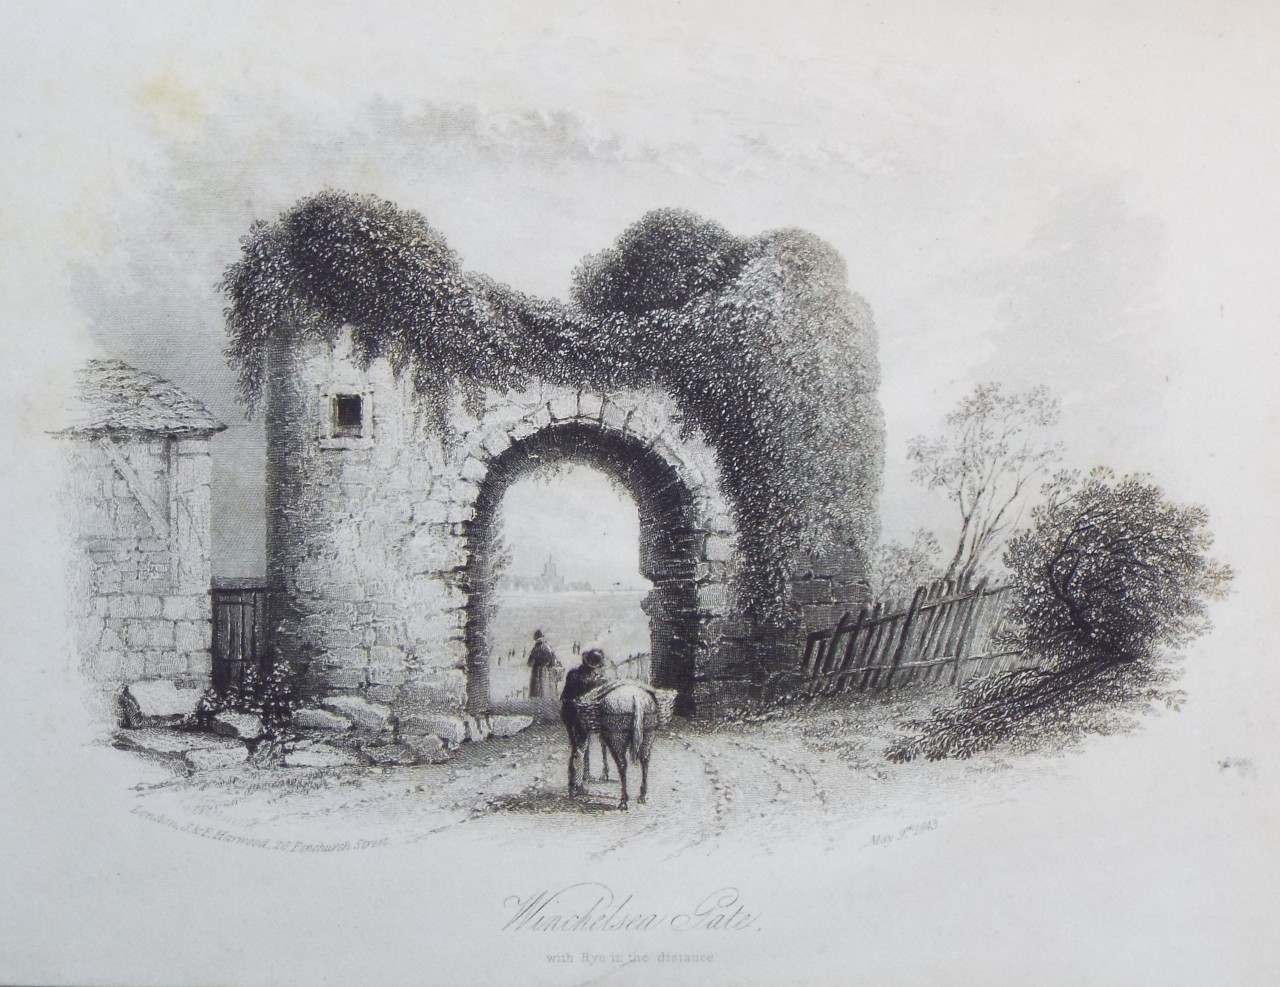 Steel Vignette - Winchelsea Gate, with Rye in the distance - J